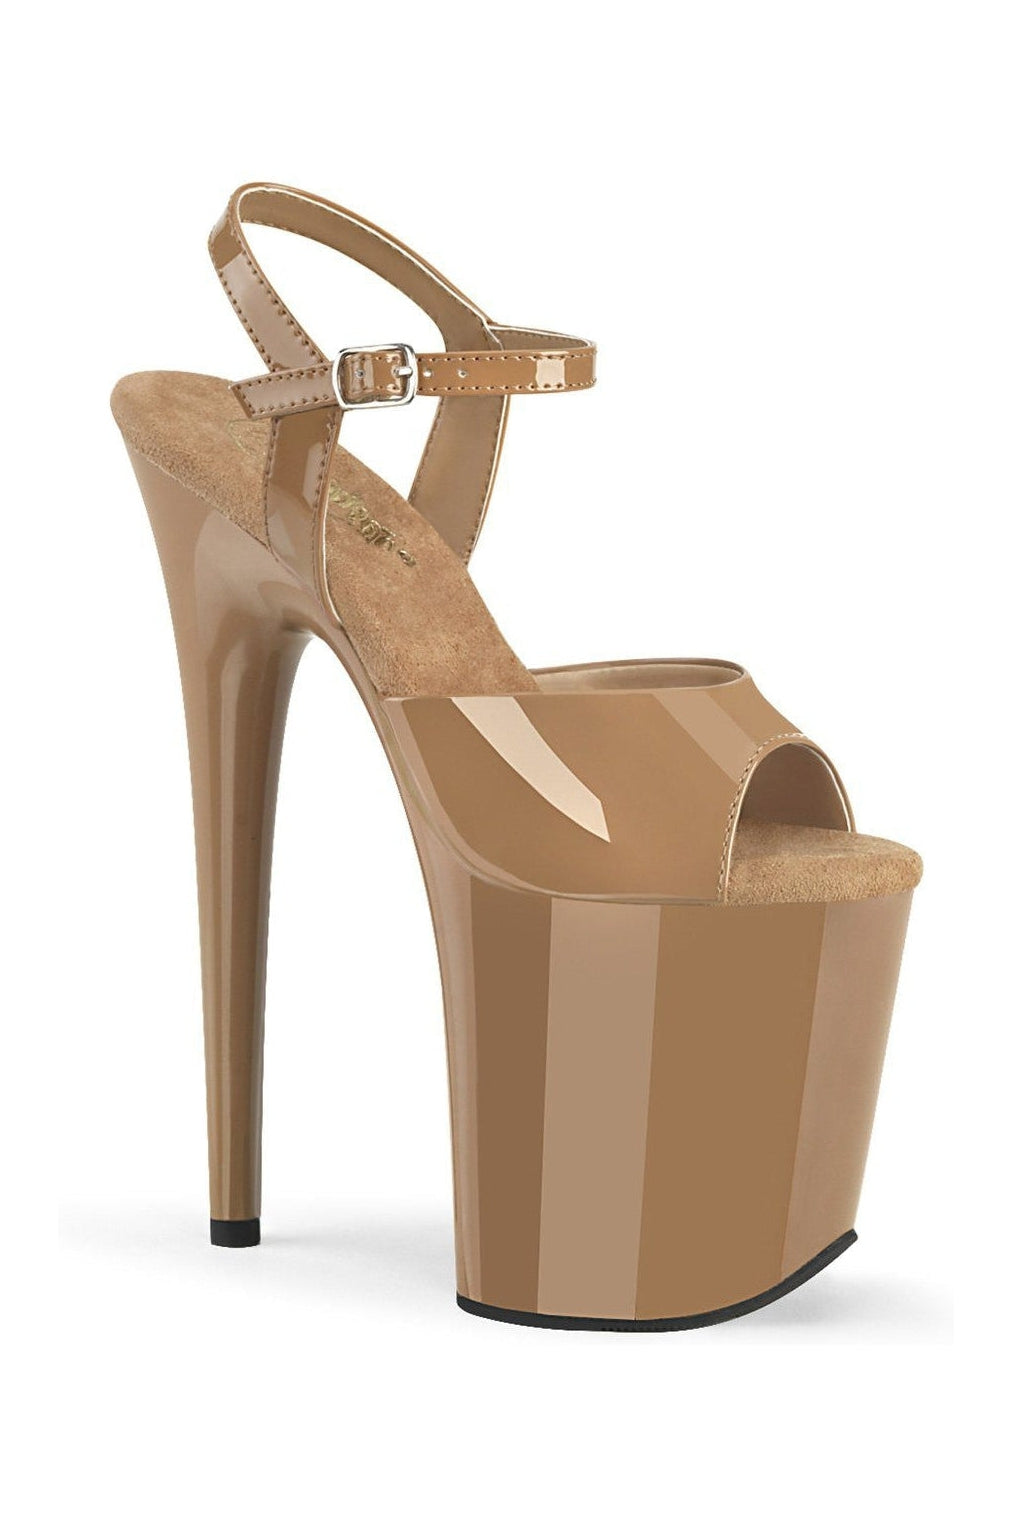 FLAMINGO-809 Sandal | Brown Patent-Sandals-Pleaser-Brown-7-Patent-SEXYSHOES.COM